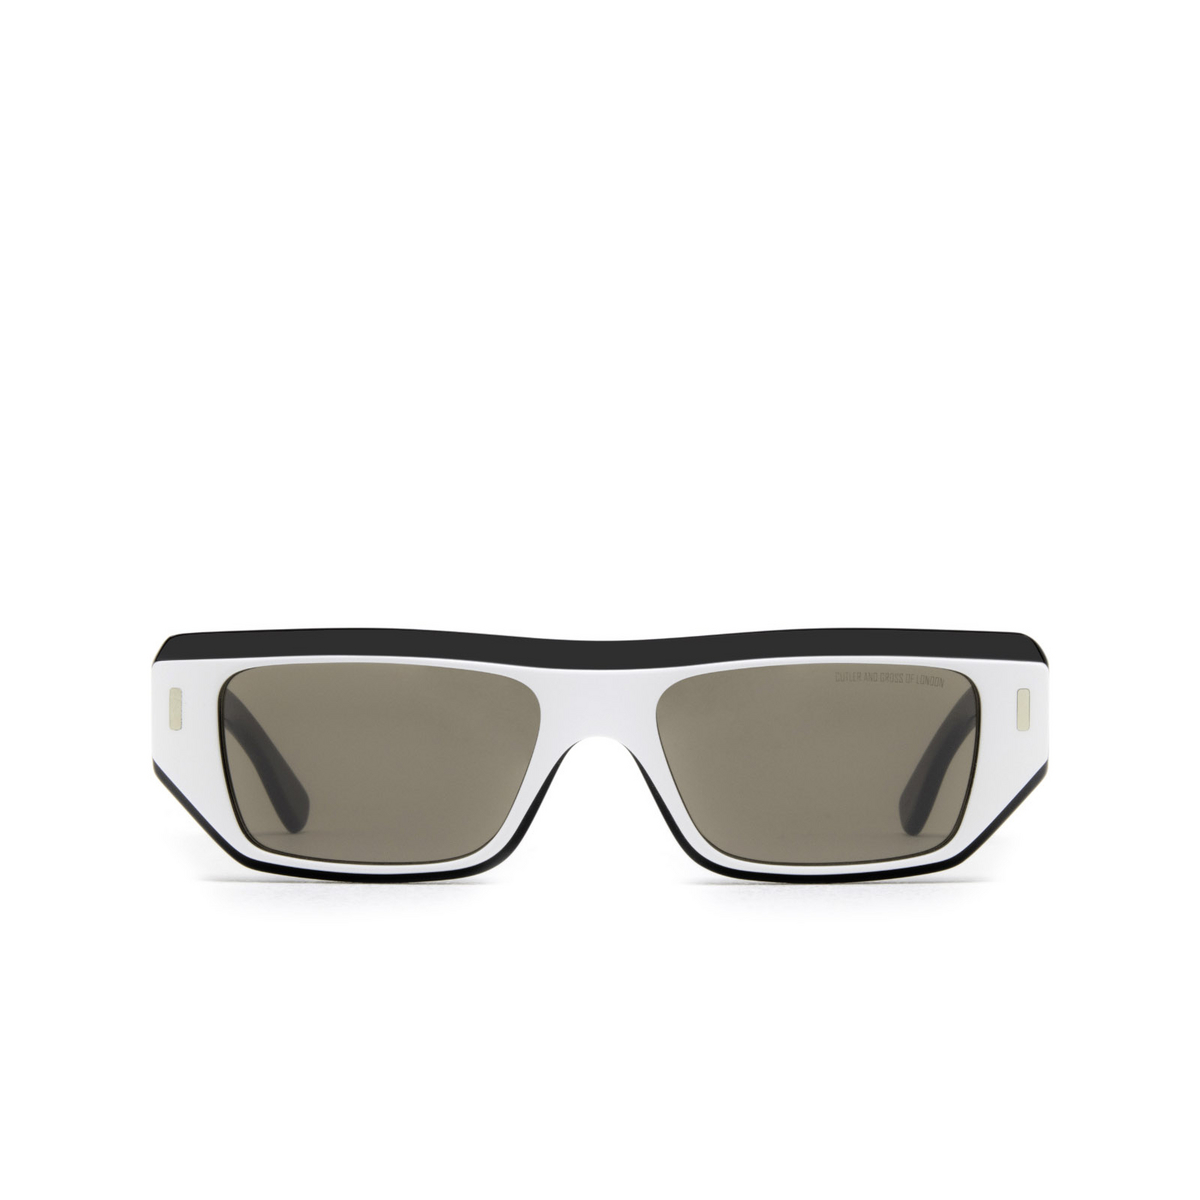 Cutler and Gross 1367 Sunglasses 04 White on Matt Black - front view